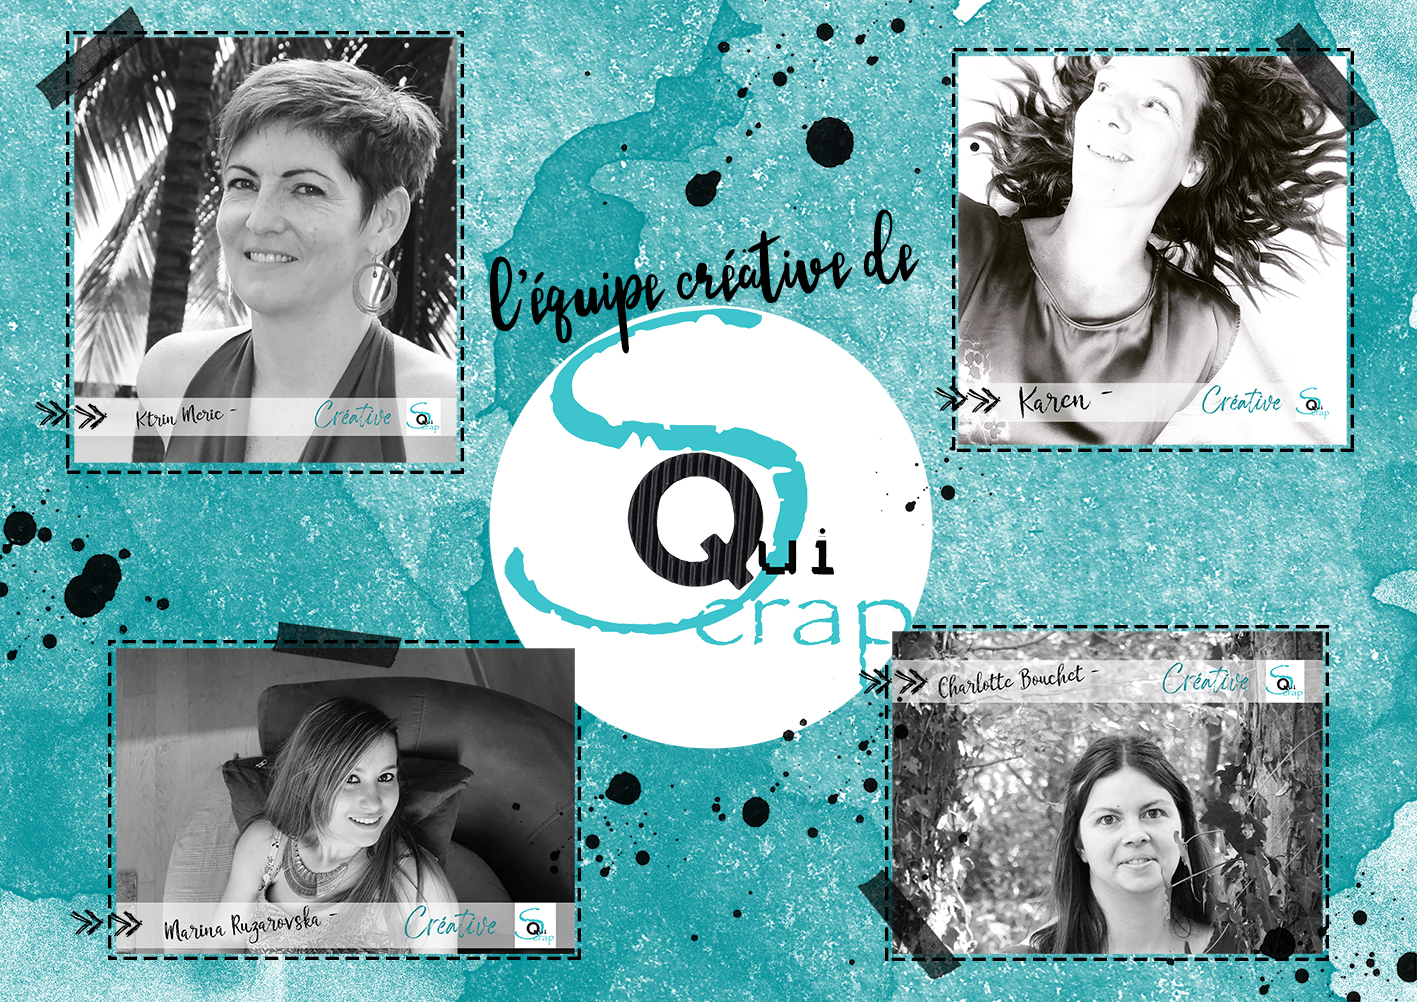 You are currently viewing La DT de Quiscrap: Charlotte BOUCHET, Marina Ruzarovska et Ktrin Meric